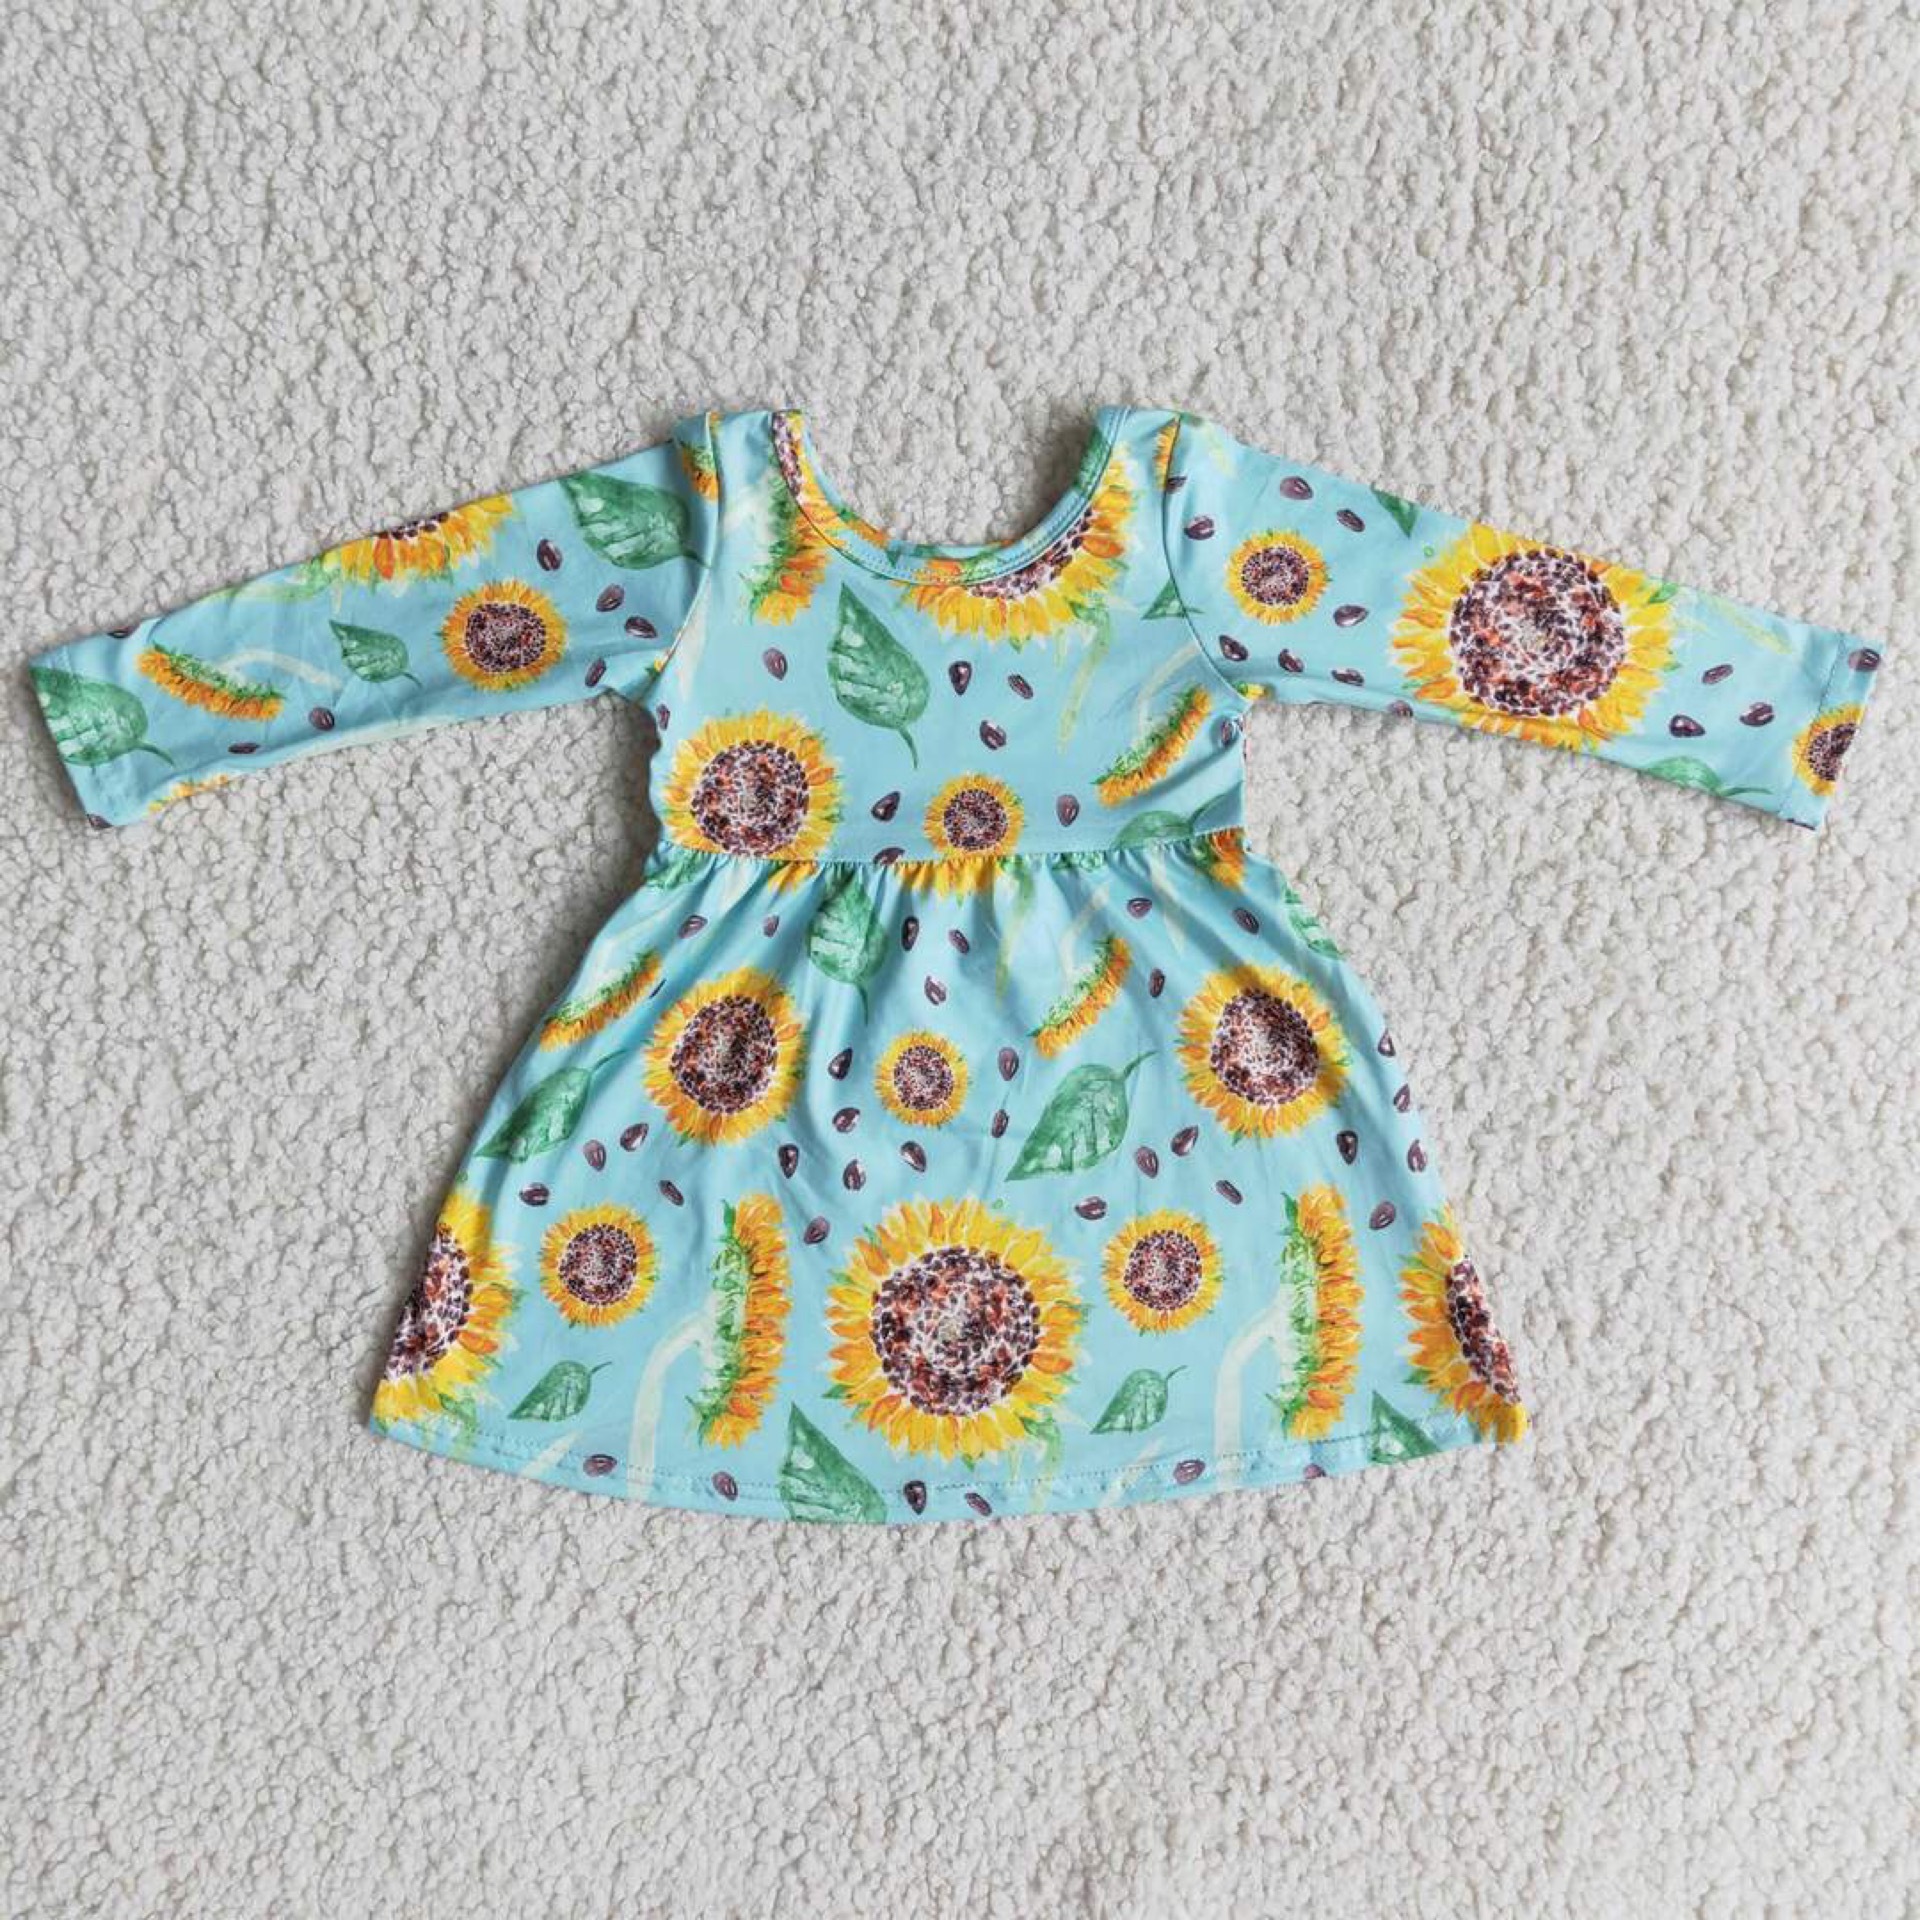 NEW Boutique Sunflower Girls Short Sleeve Pearl Dress 3T 4T 5-6 6-7 7-8 